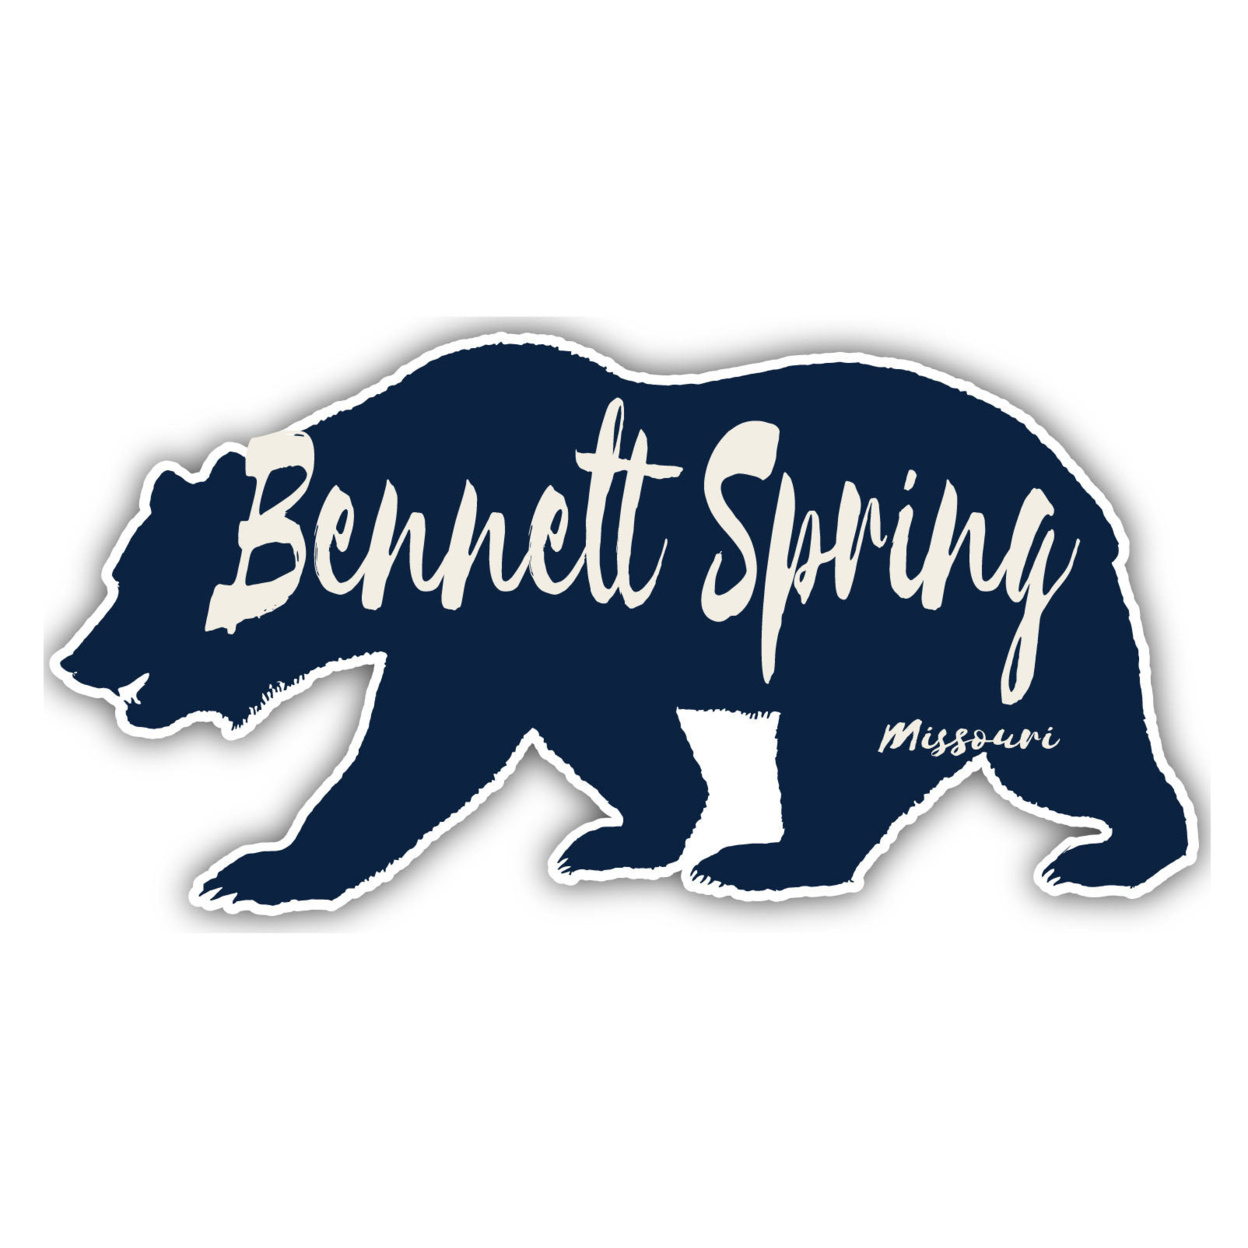 Bennett Spring Missouri Souvenir Decorative Stickers (Choose Theme And Size) - 4-Pack, 10-Inch, Bear